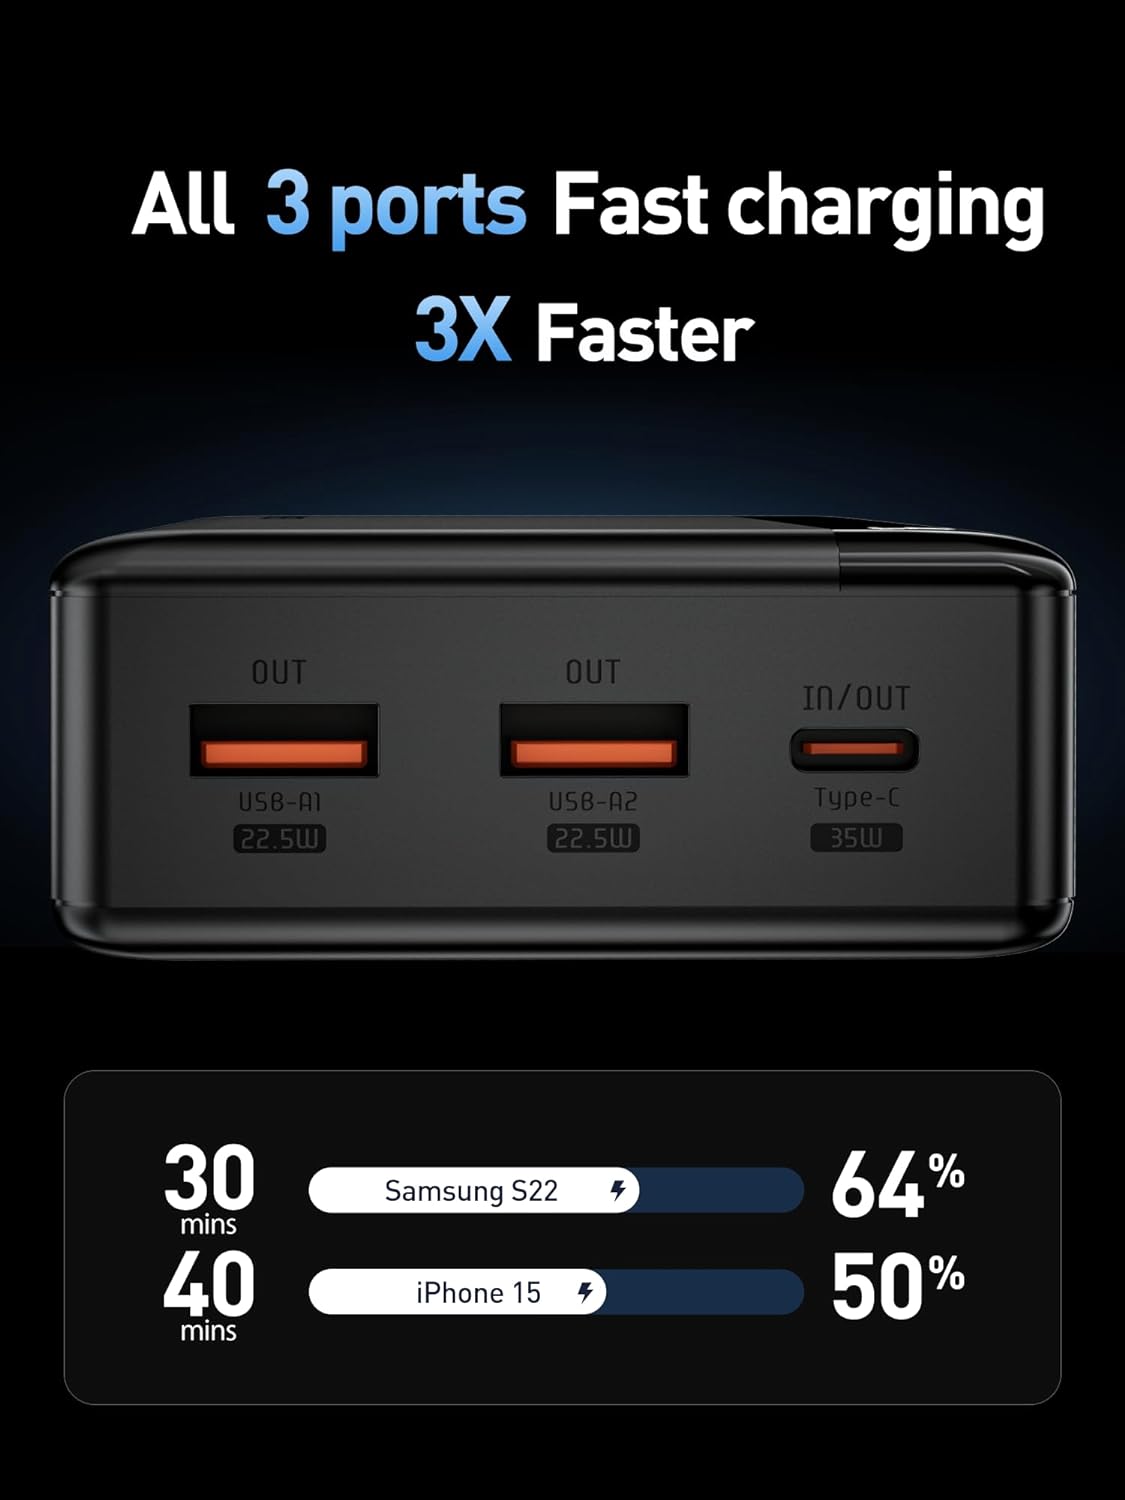 Powerbank 20000mAh Display + Cables USB/PD/iPhone Lightning